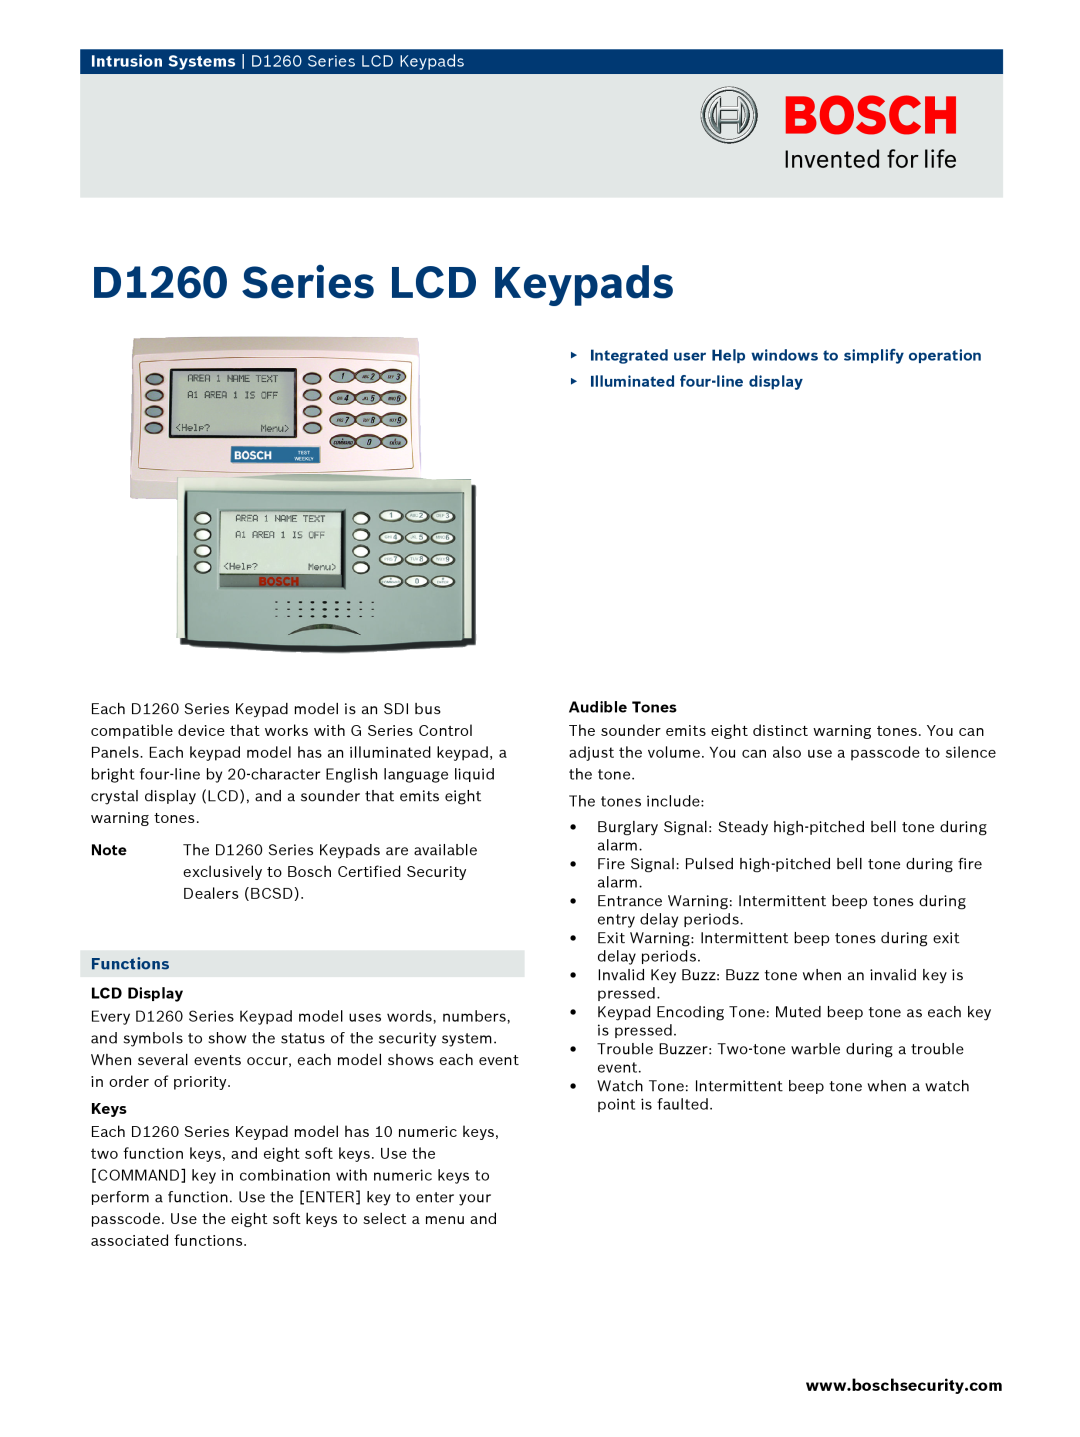 Bosch Appliances owner manual D1260/D1260B, Keypad, Owners Manual 